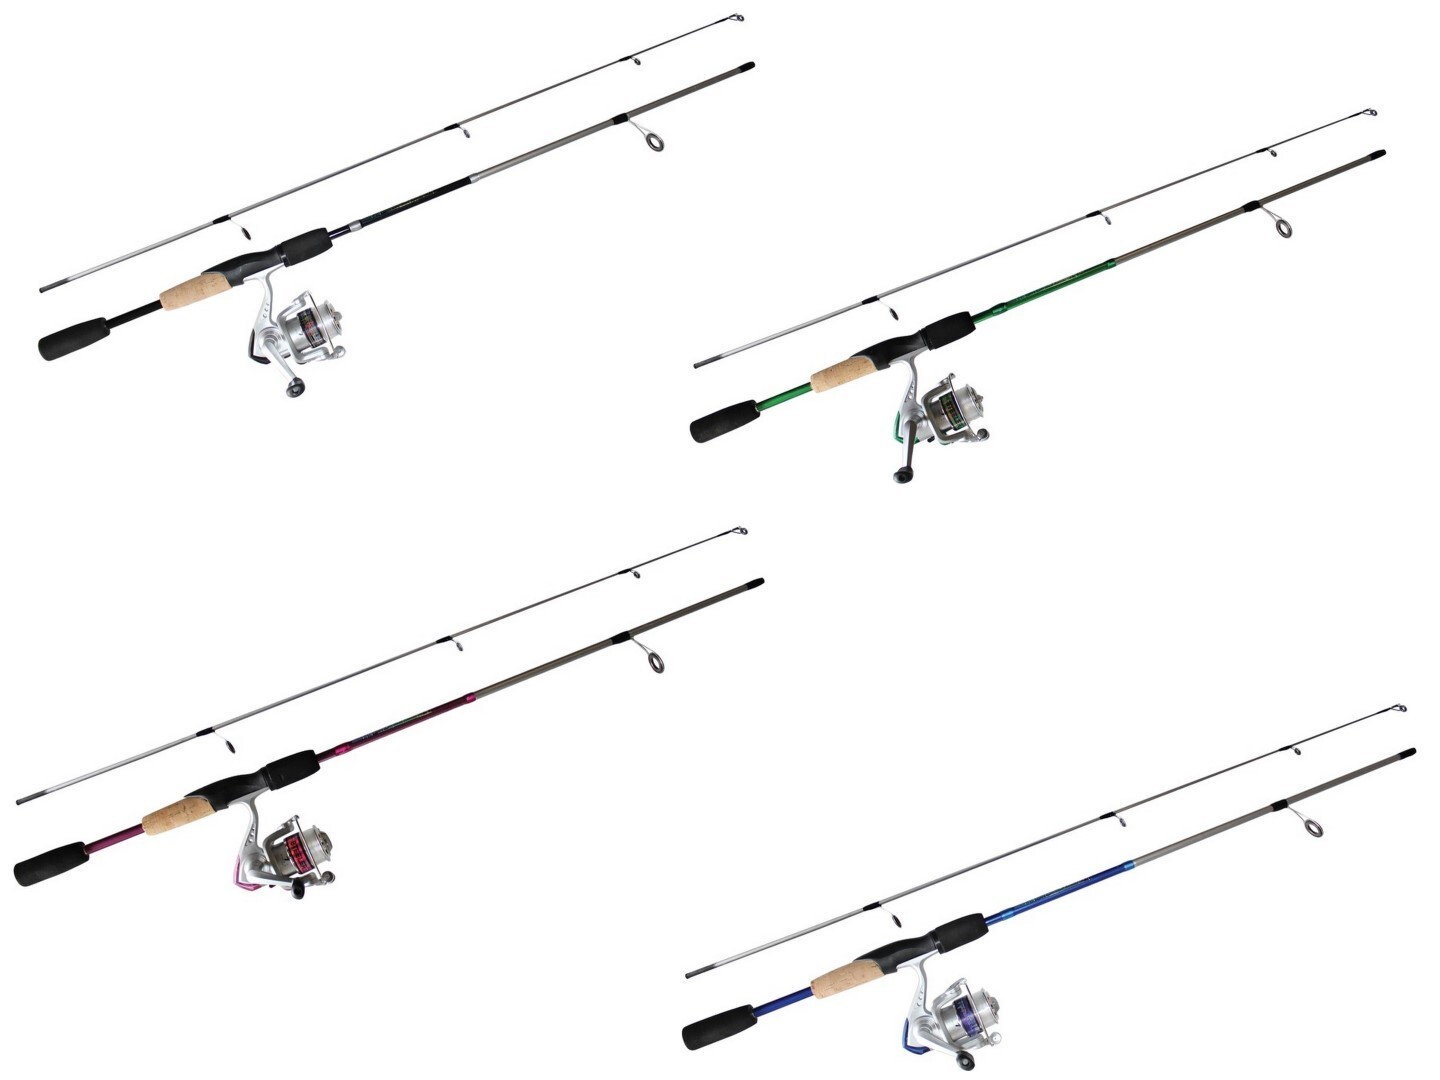 5'6 Okuma Steeler XP 2 Piece 2-4kg Fishing Rod and Reel Combo